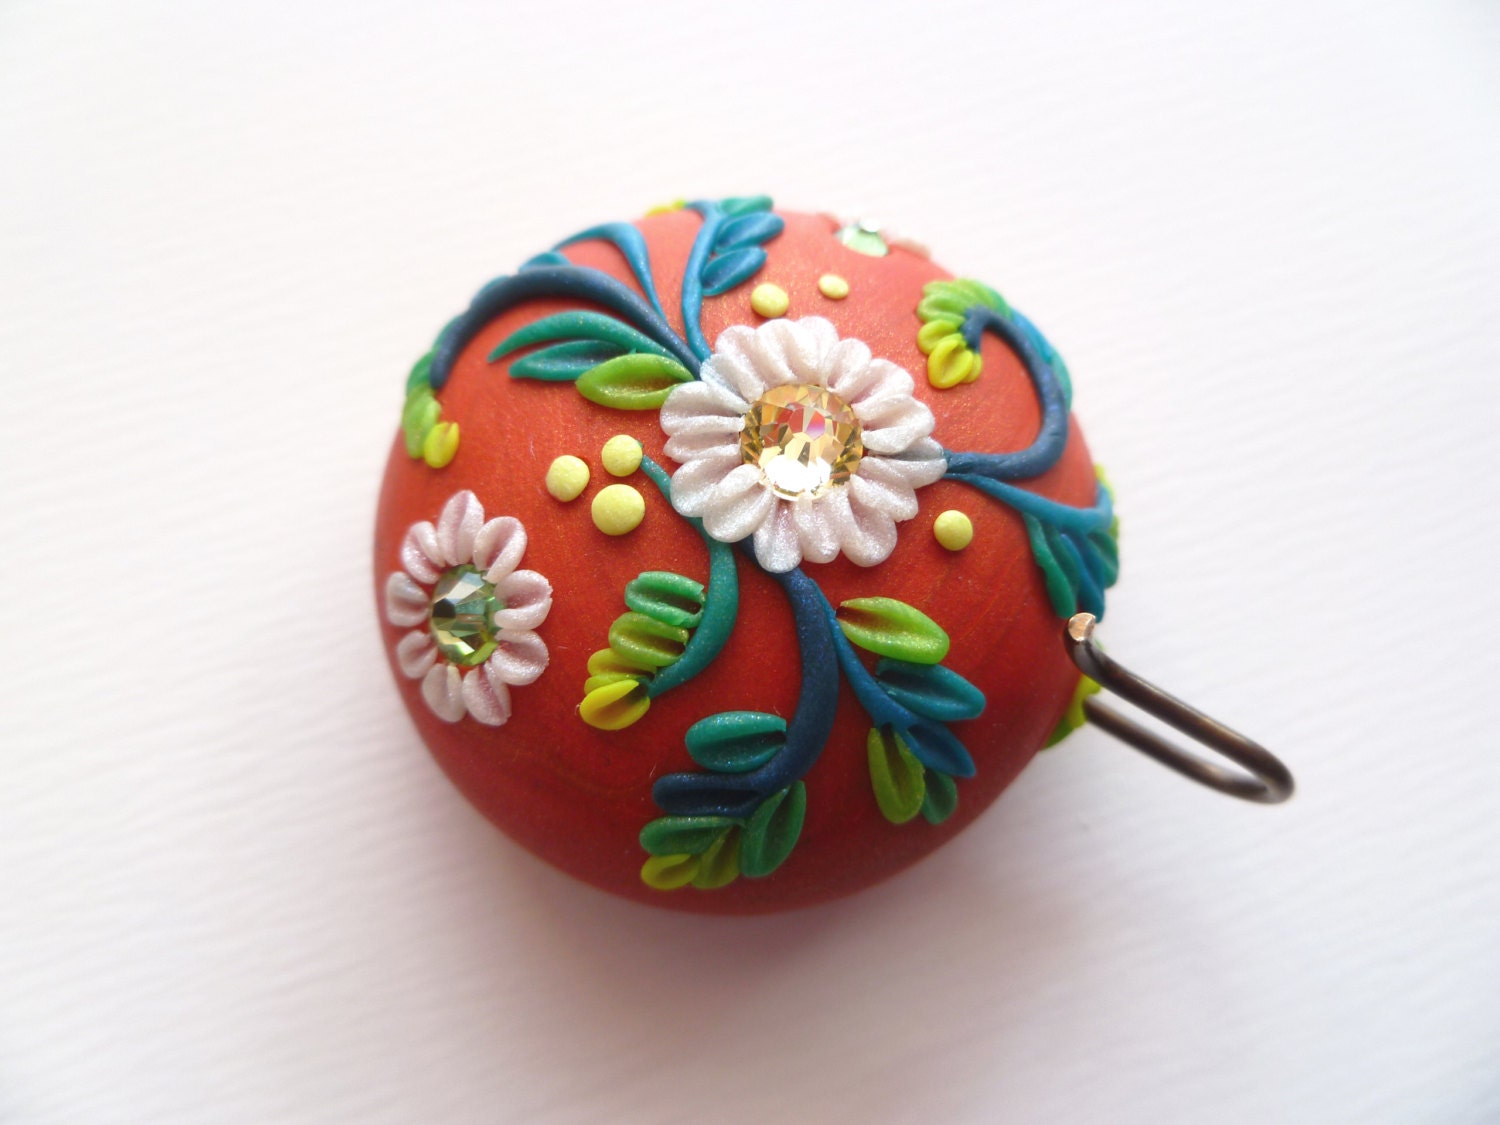 Portuguese Knitting Pin - Magnetic Portuguese Knitting Pin - Handmade Knitting Pin or Badge Holder - FlightyFleurs